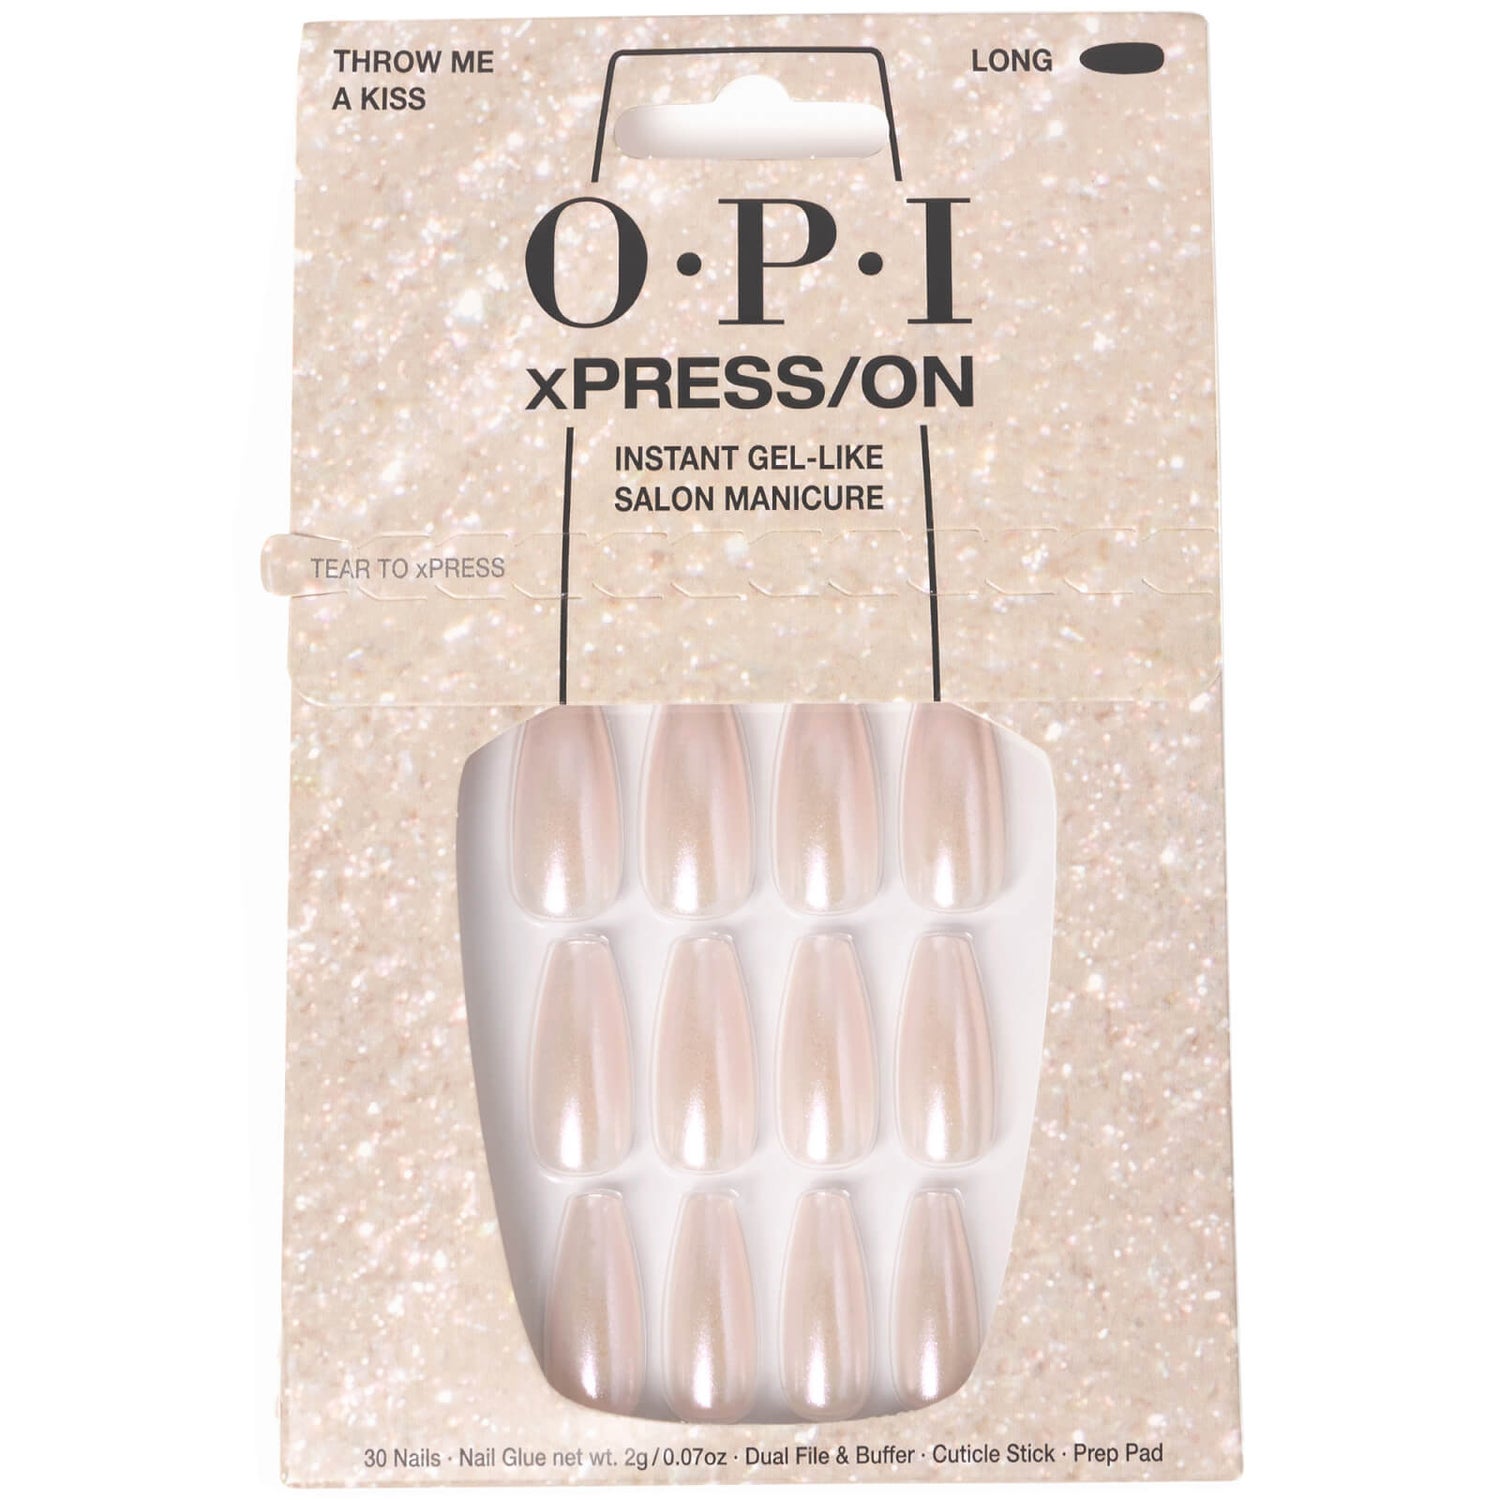 OPI xPRESS/ON - Throw Me a Kiss- LONG Press On Nails Gel-Like Salon Manicure